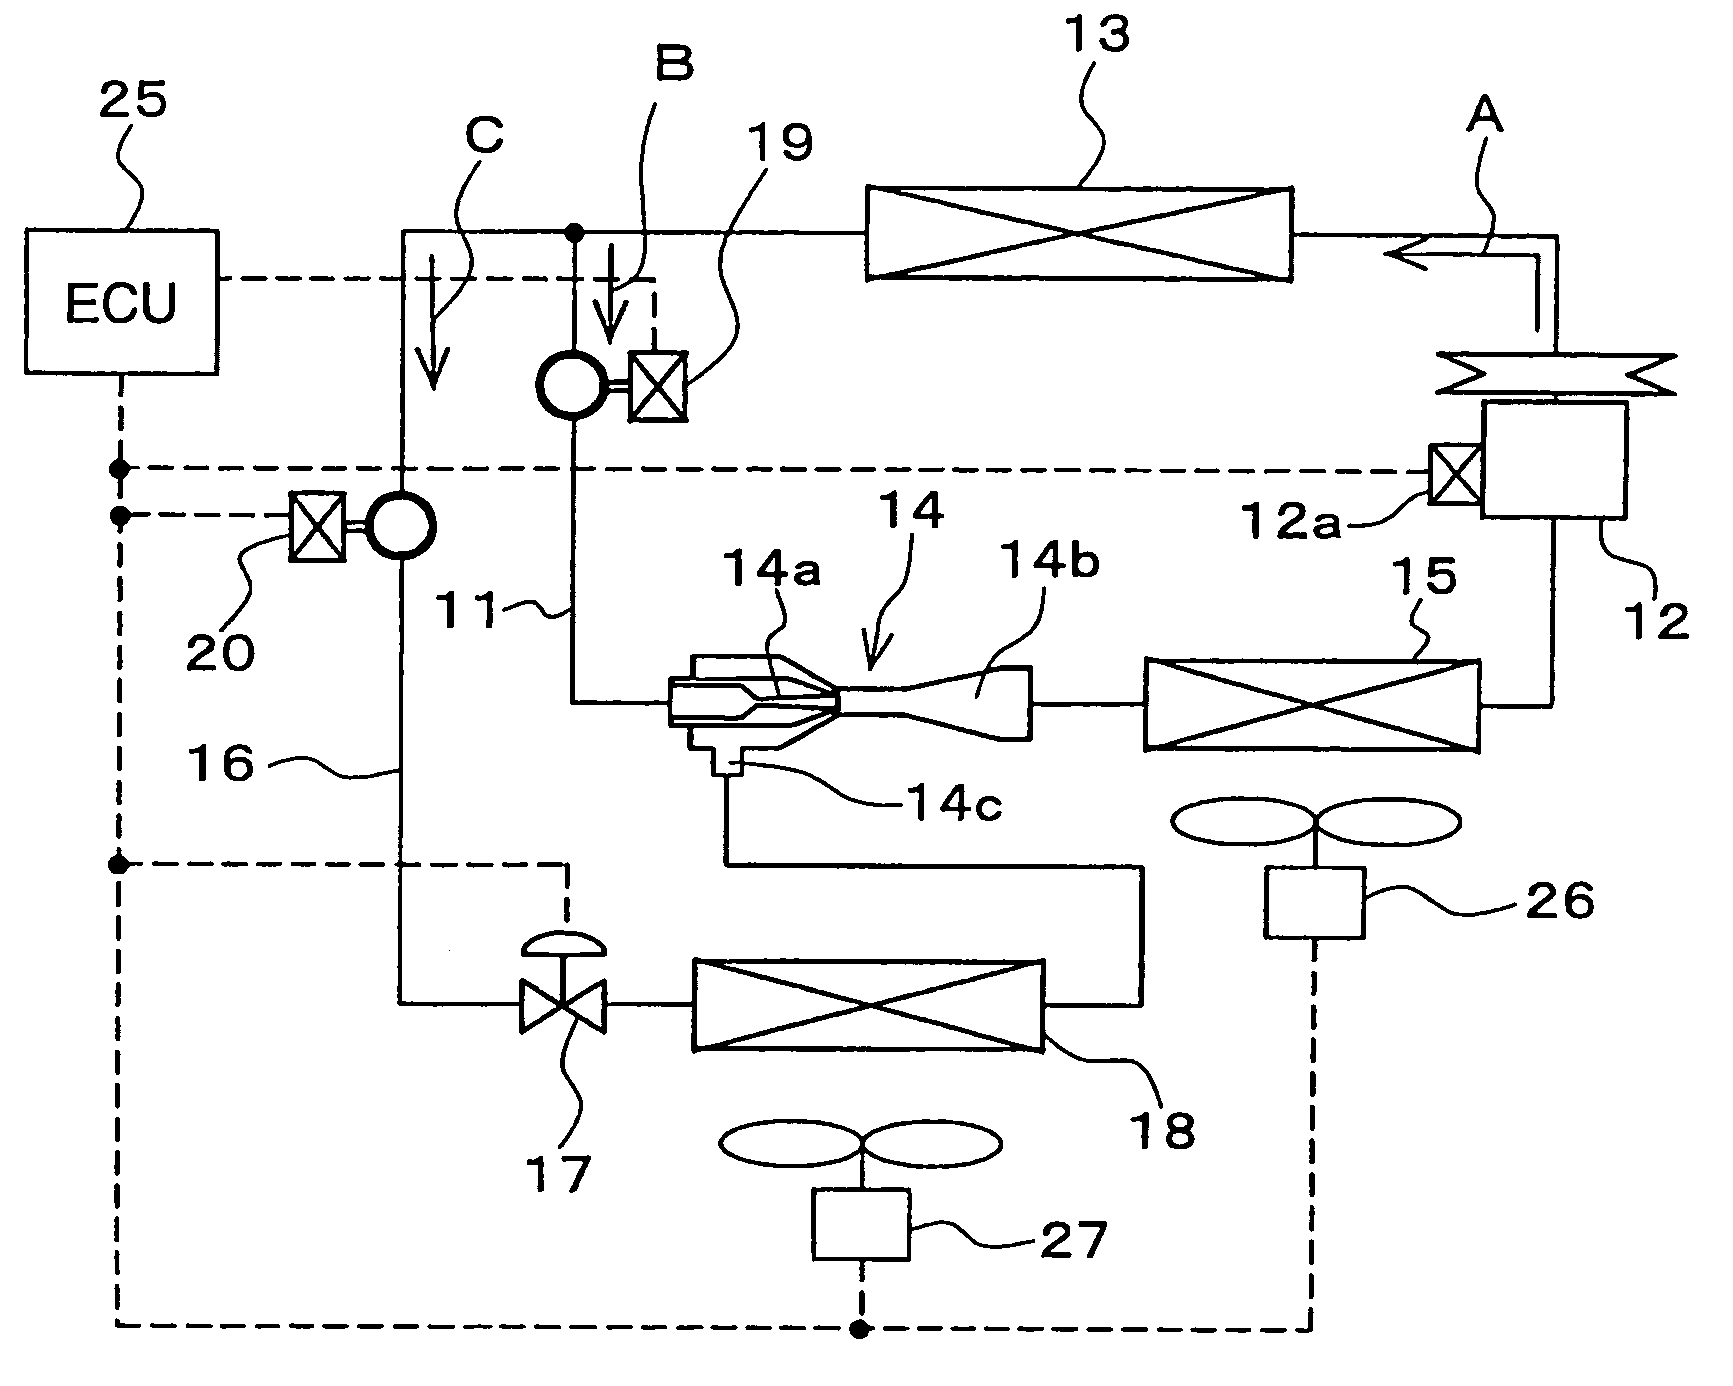 Ejector cycle having multiple evaporators